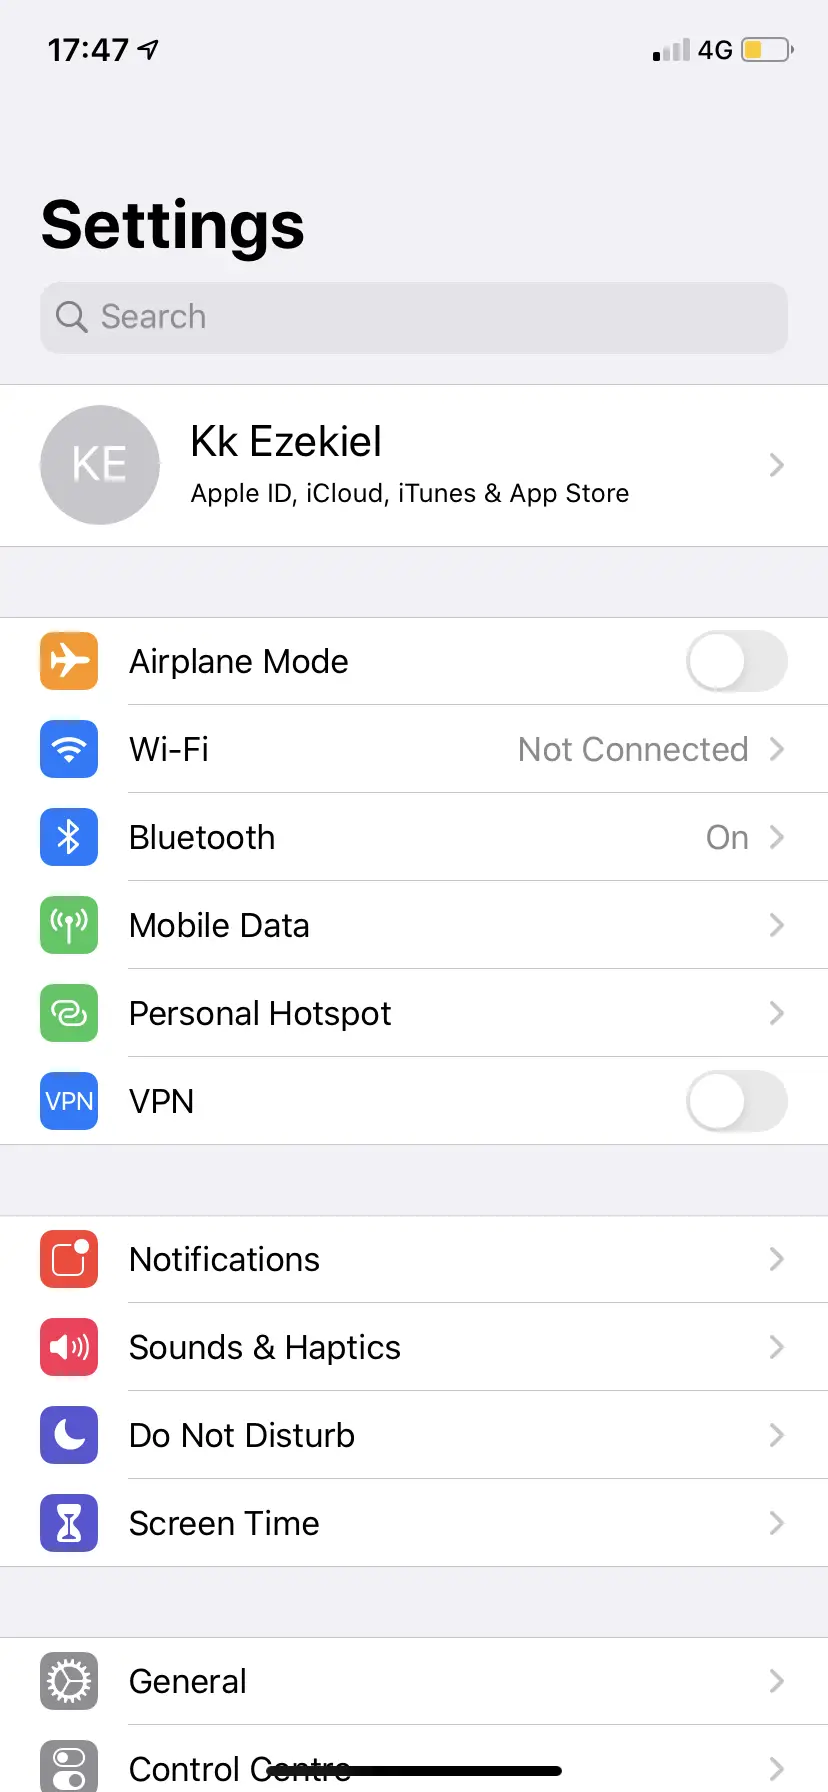 ¿Puedes conectar tu iPhone a WIFI usando WPS?